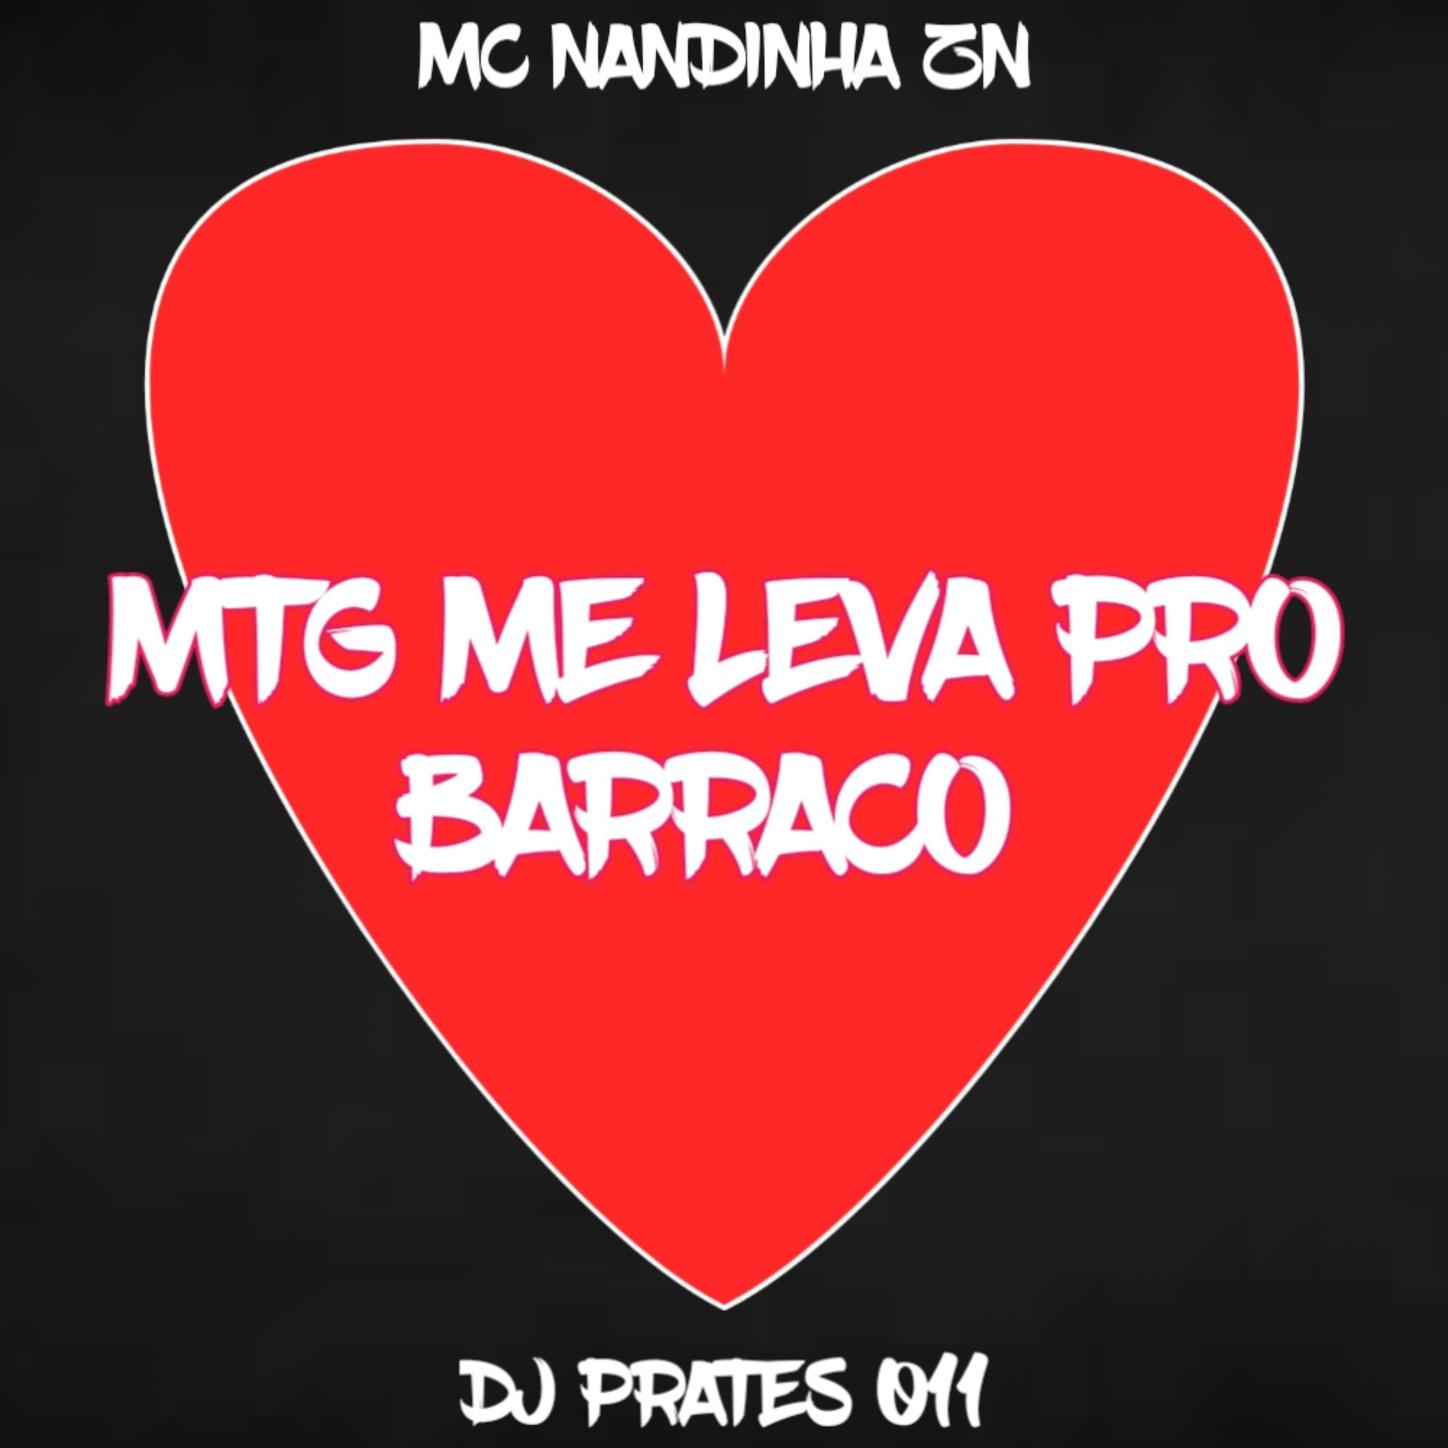 DJ PRATES 011 - MTG ME LEVA PRO BARRACO